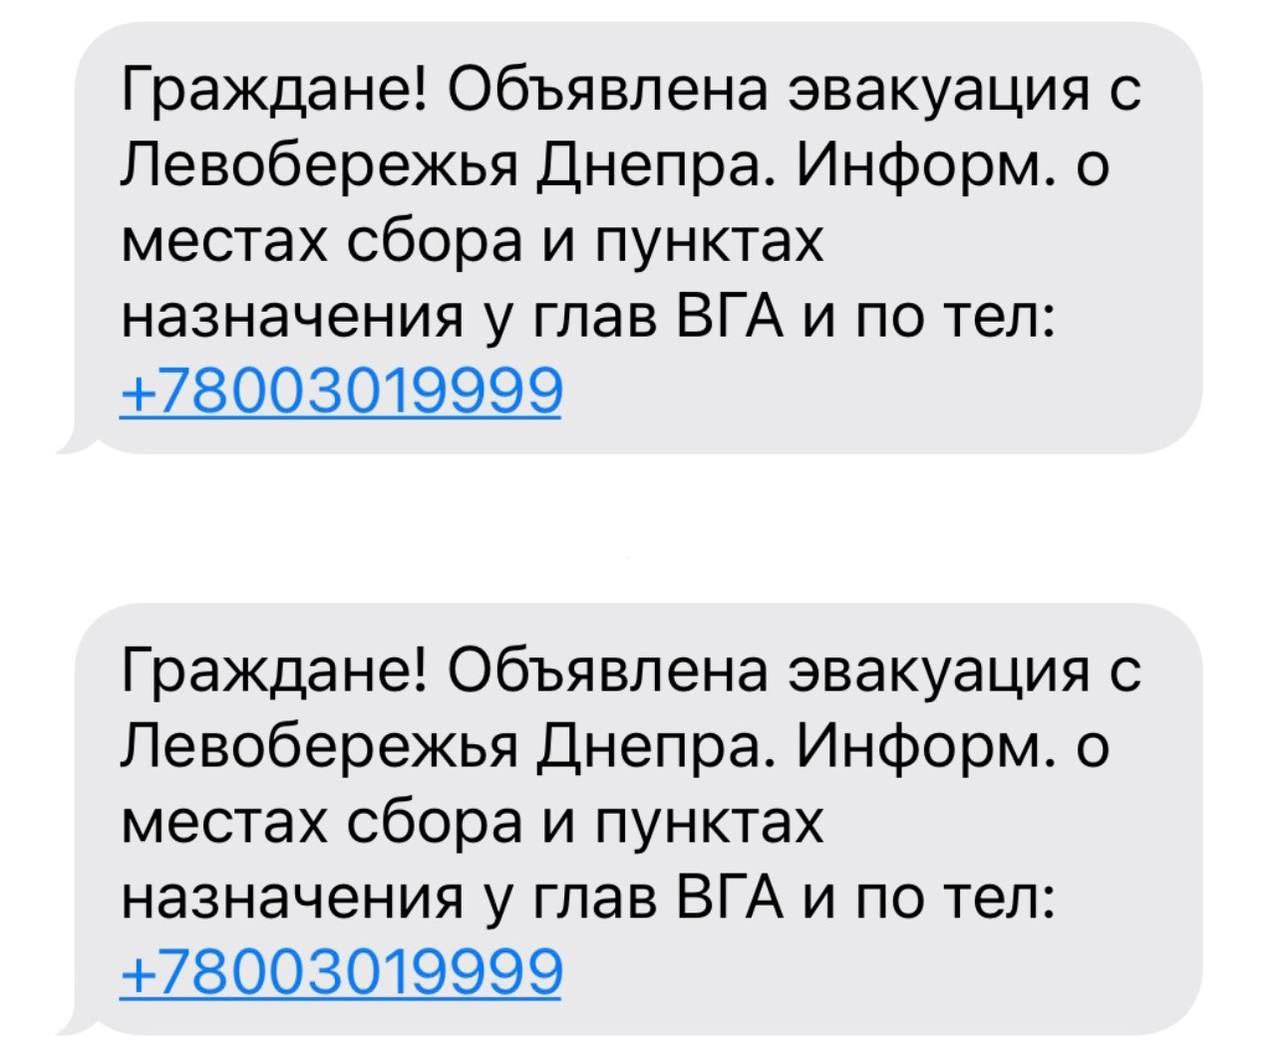 Украина 24 телеграмм на русском фото 83